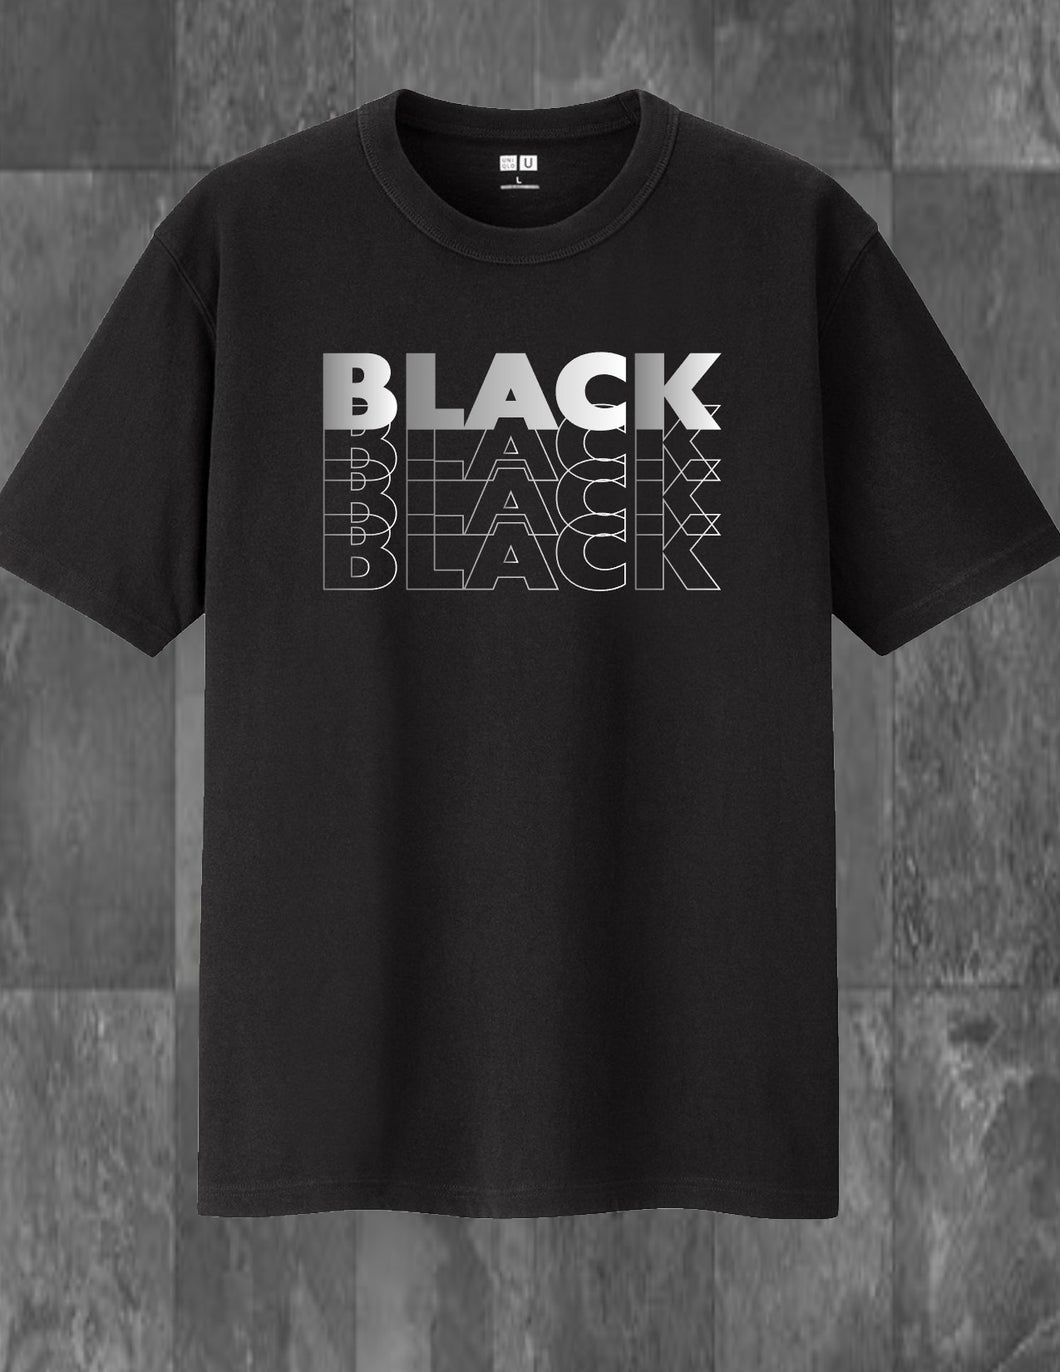 Black Black Black